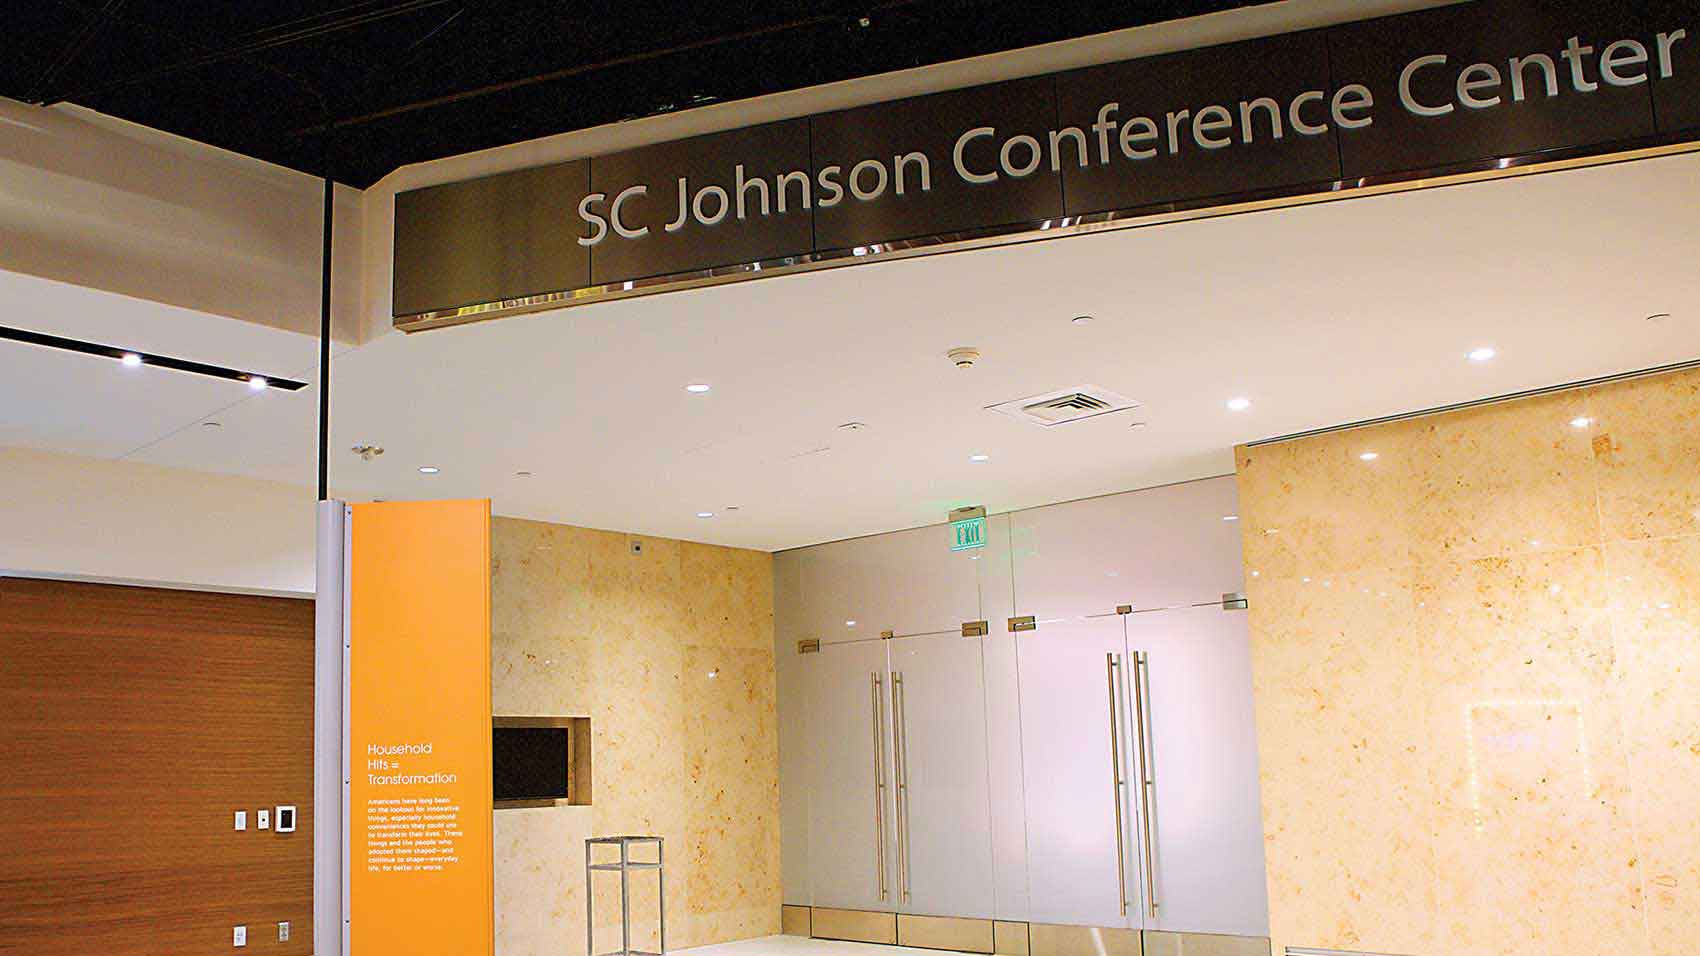 Smithsonian SC Johnson Conference Center